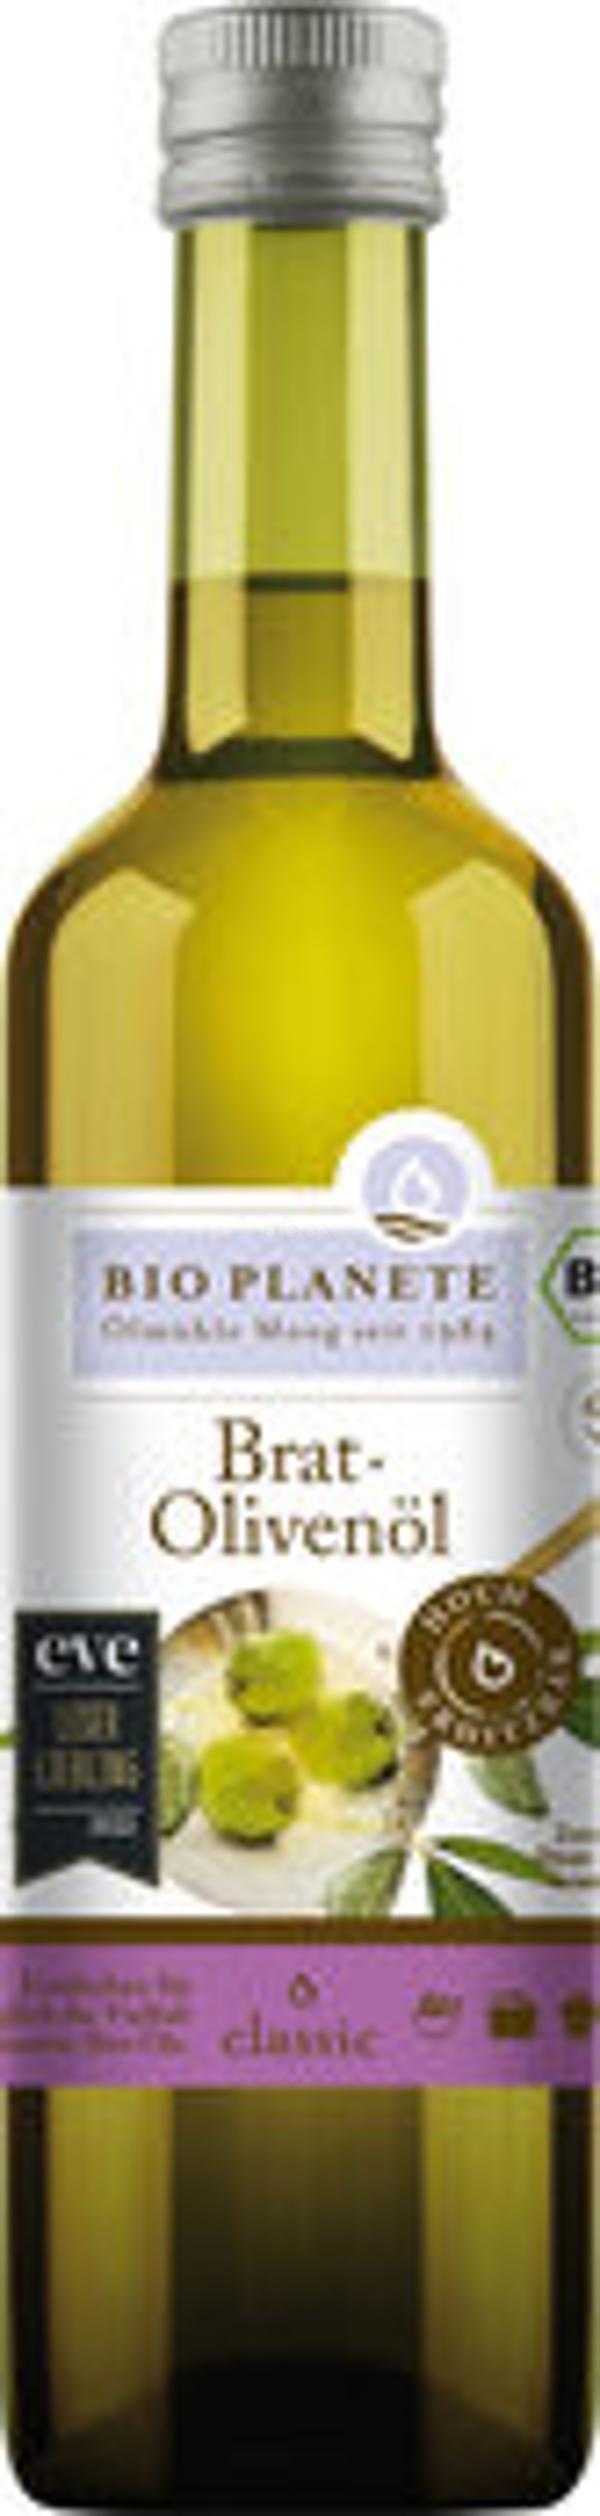 Produktfoto zu Brat Olivenöl, 0,5l